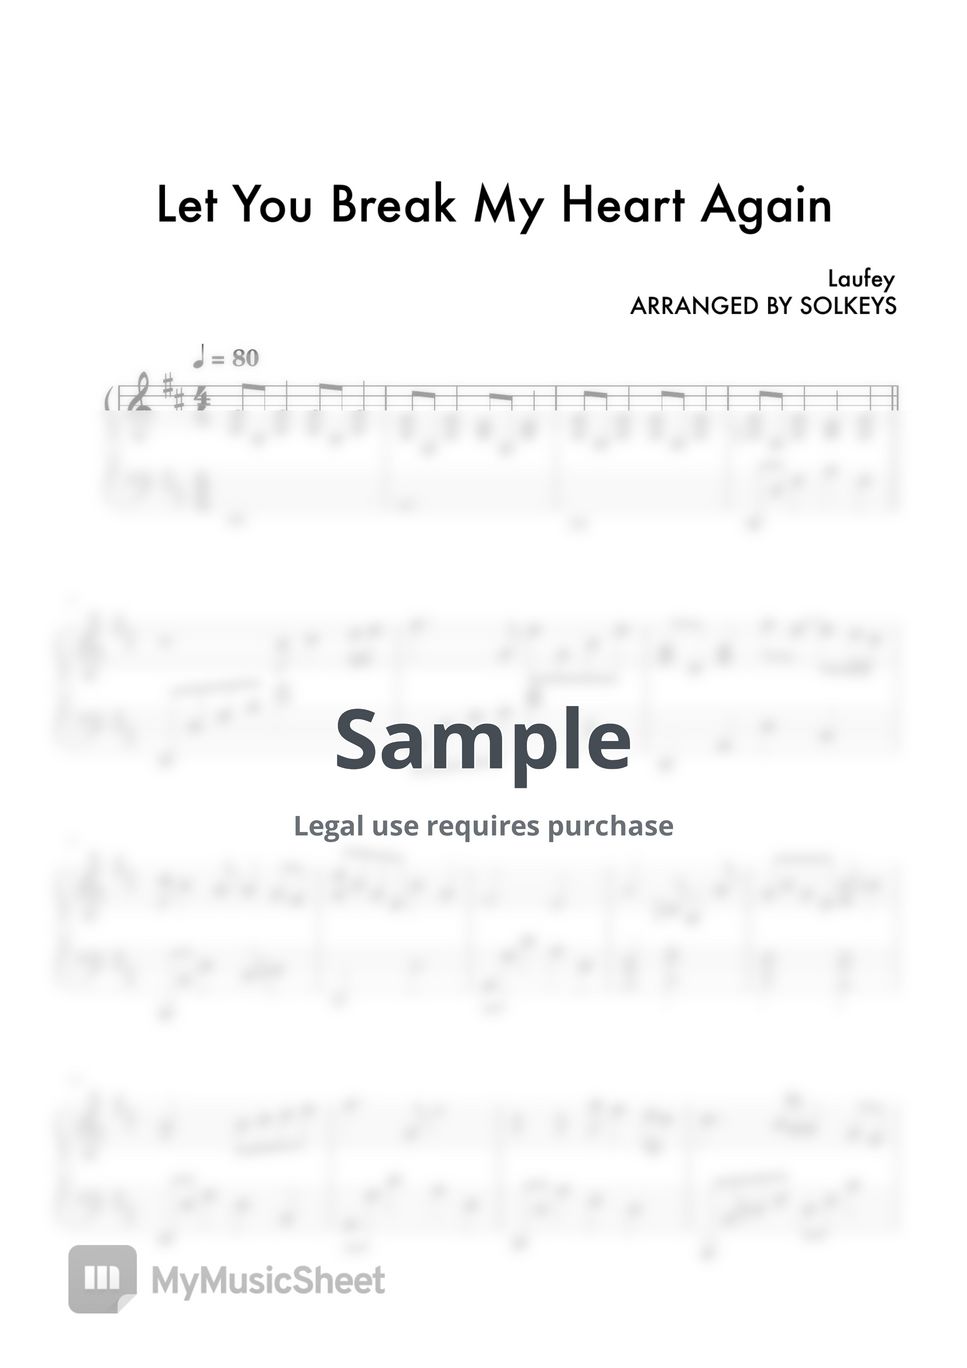 Let You Break My Heart Again – Laufey Sheet music for Piano (Solo